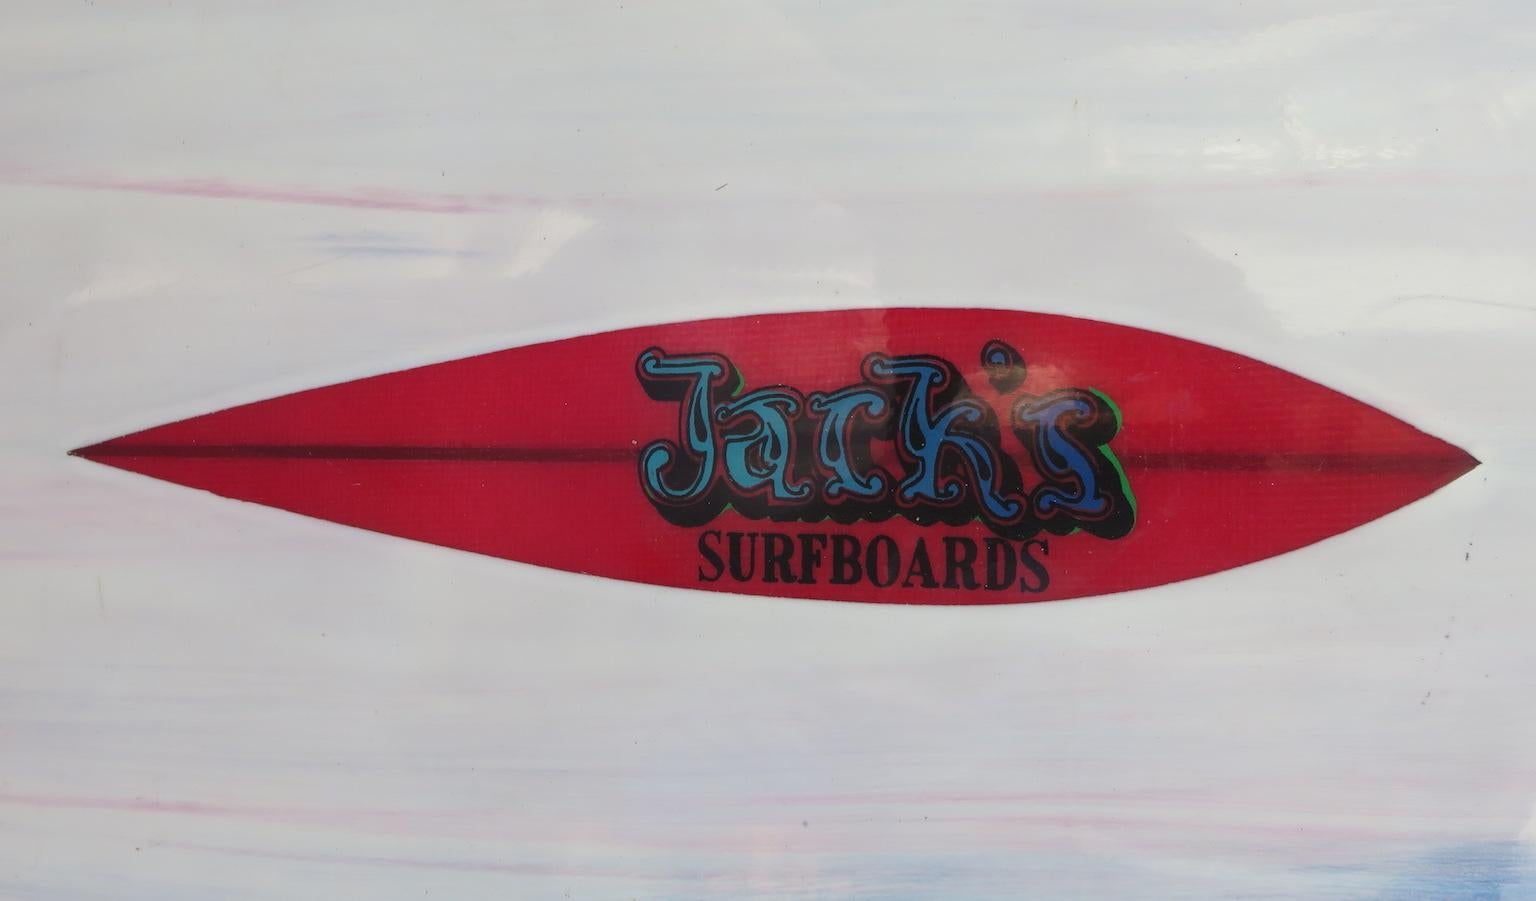 jackssurfboard